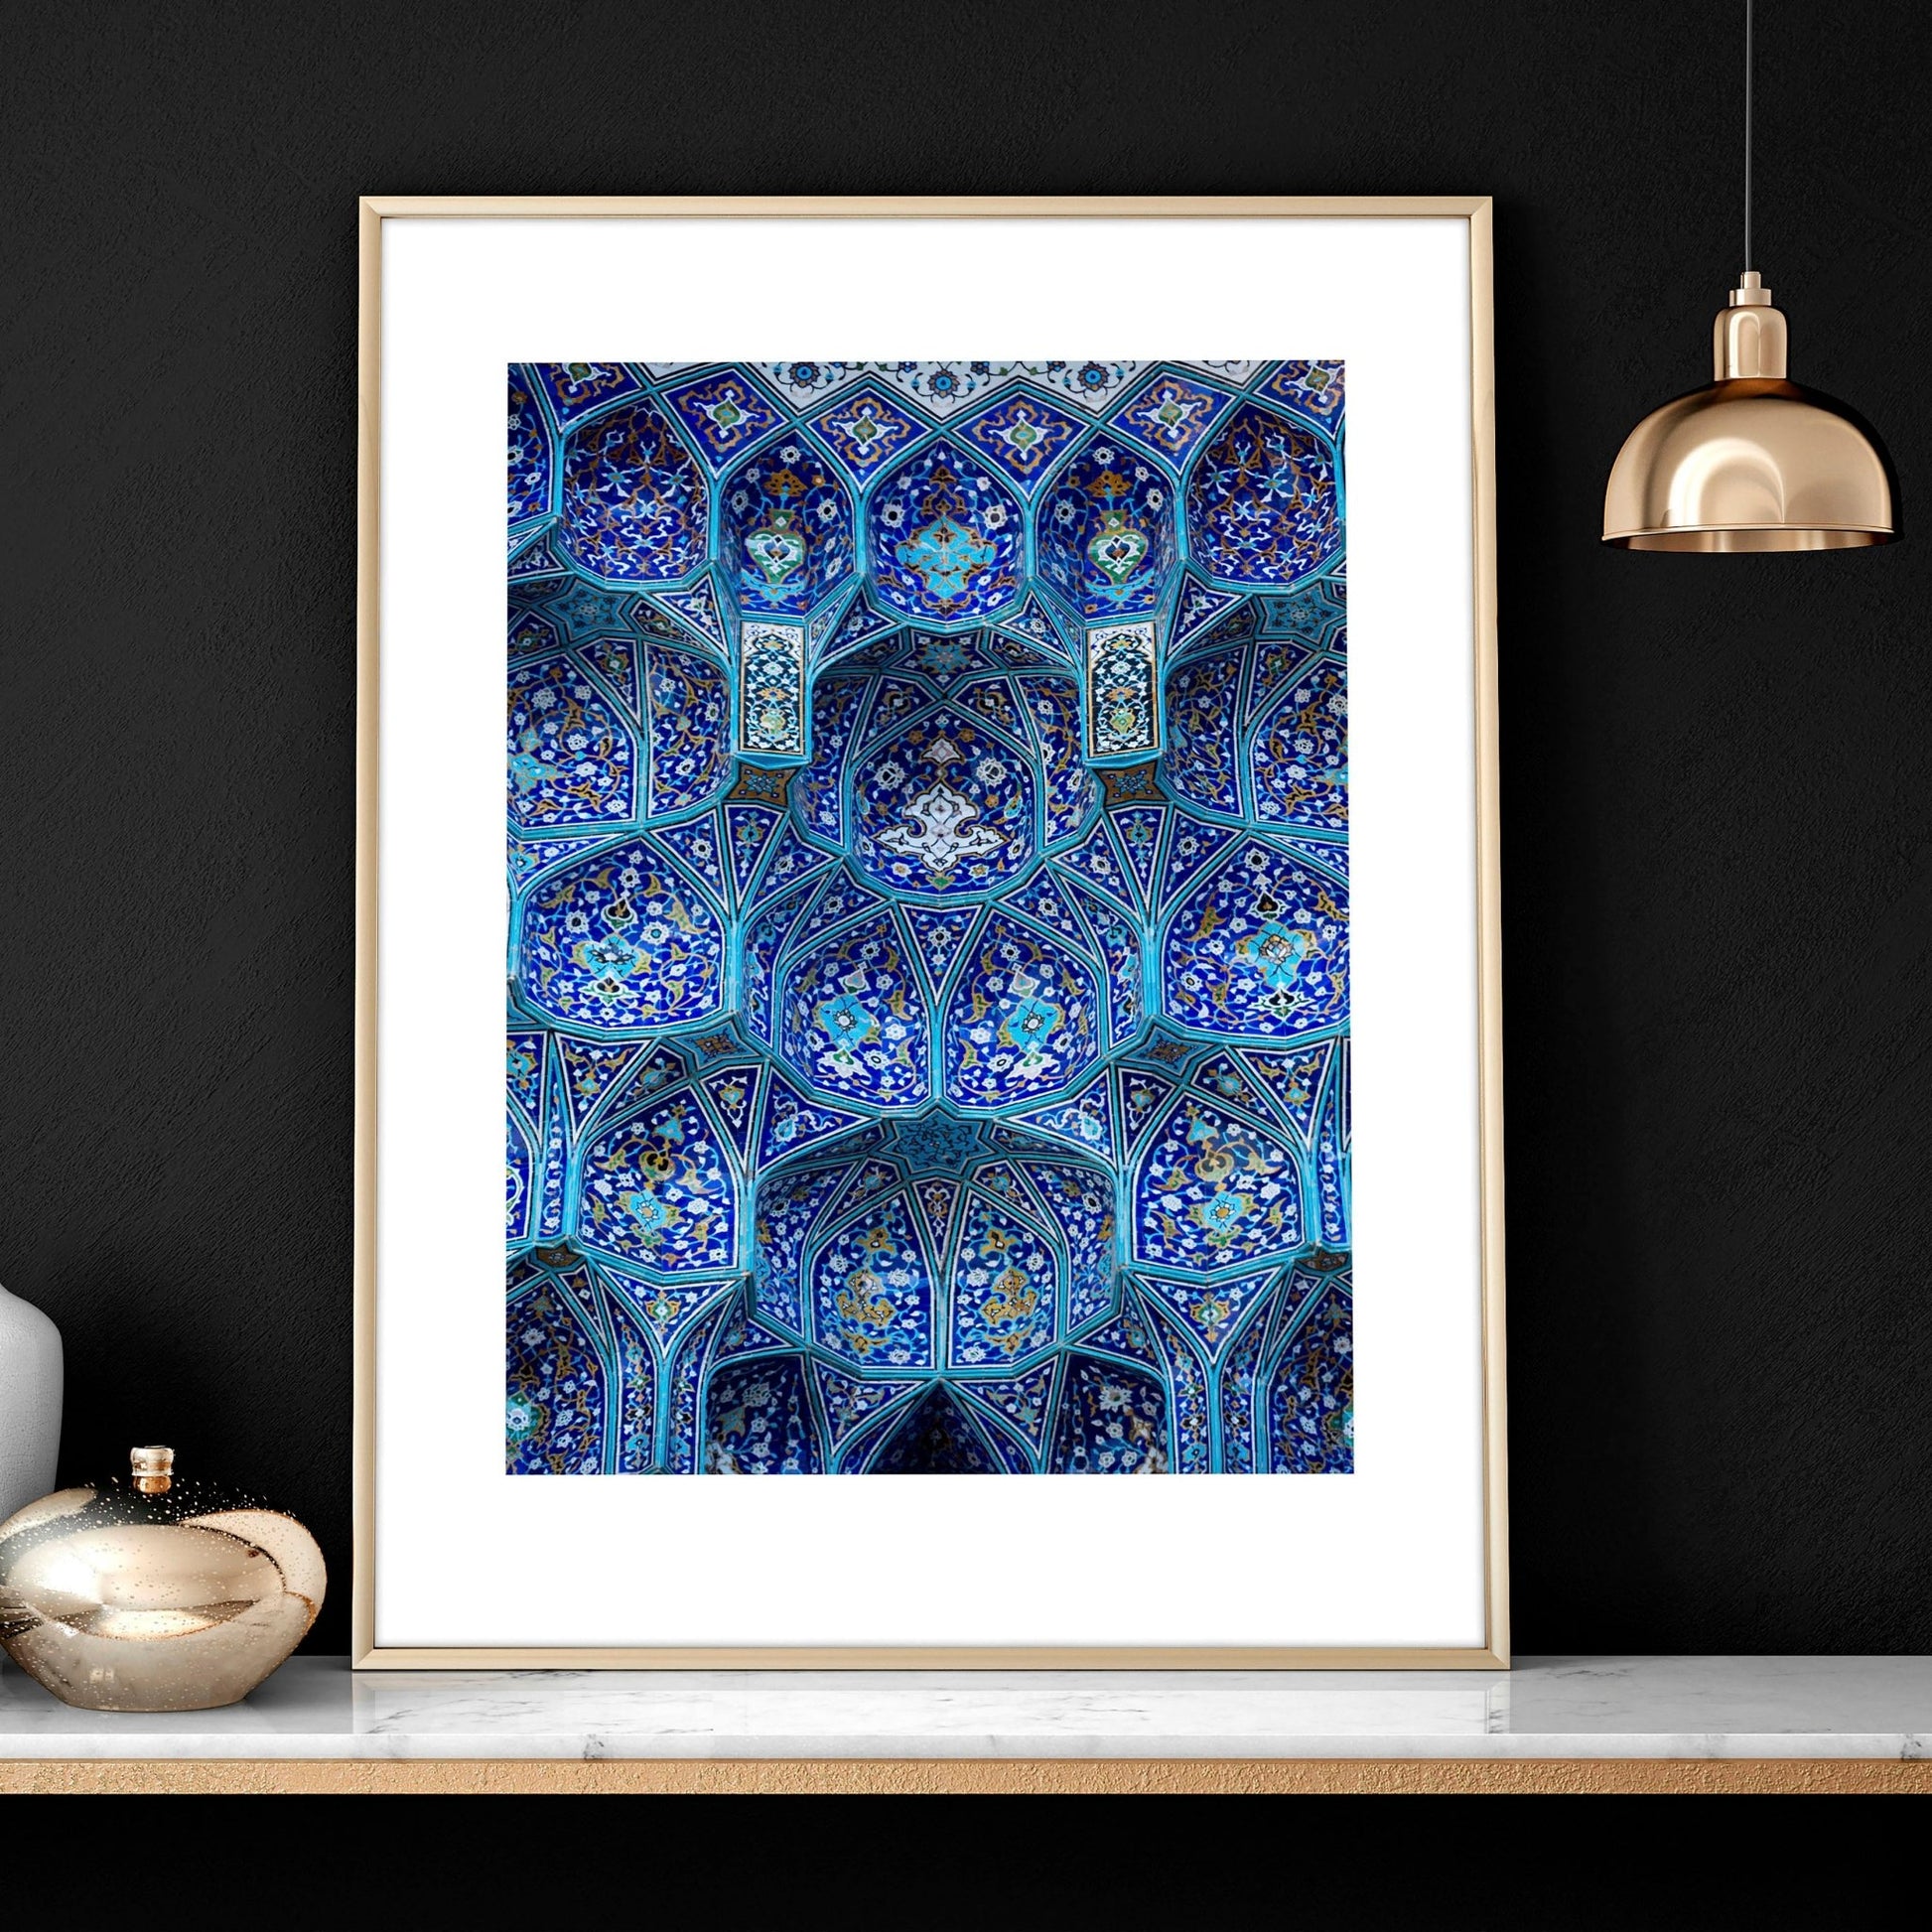 Geometry Islamic Art for bedroom | set of 3 wall art prints